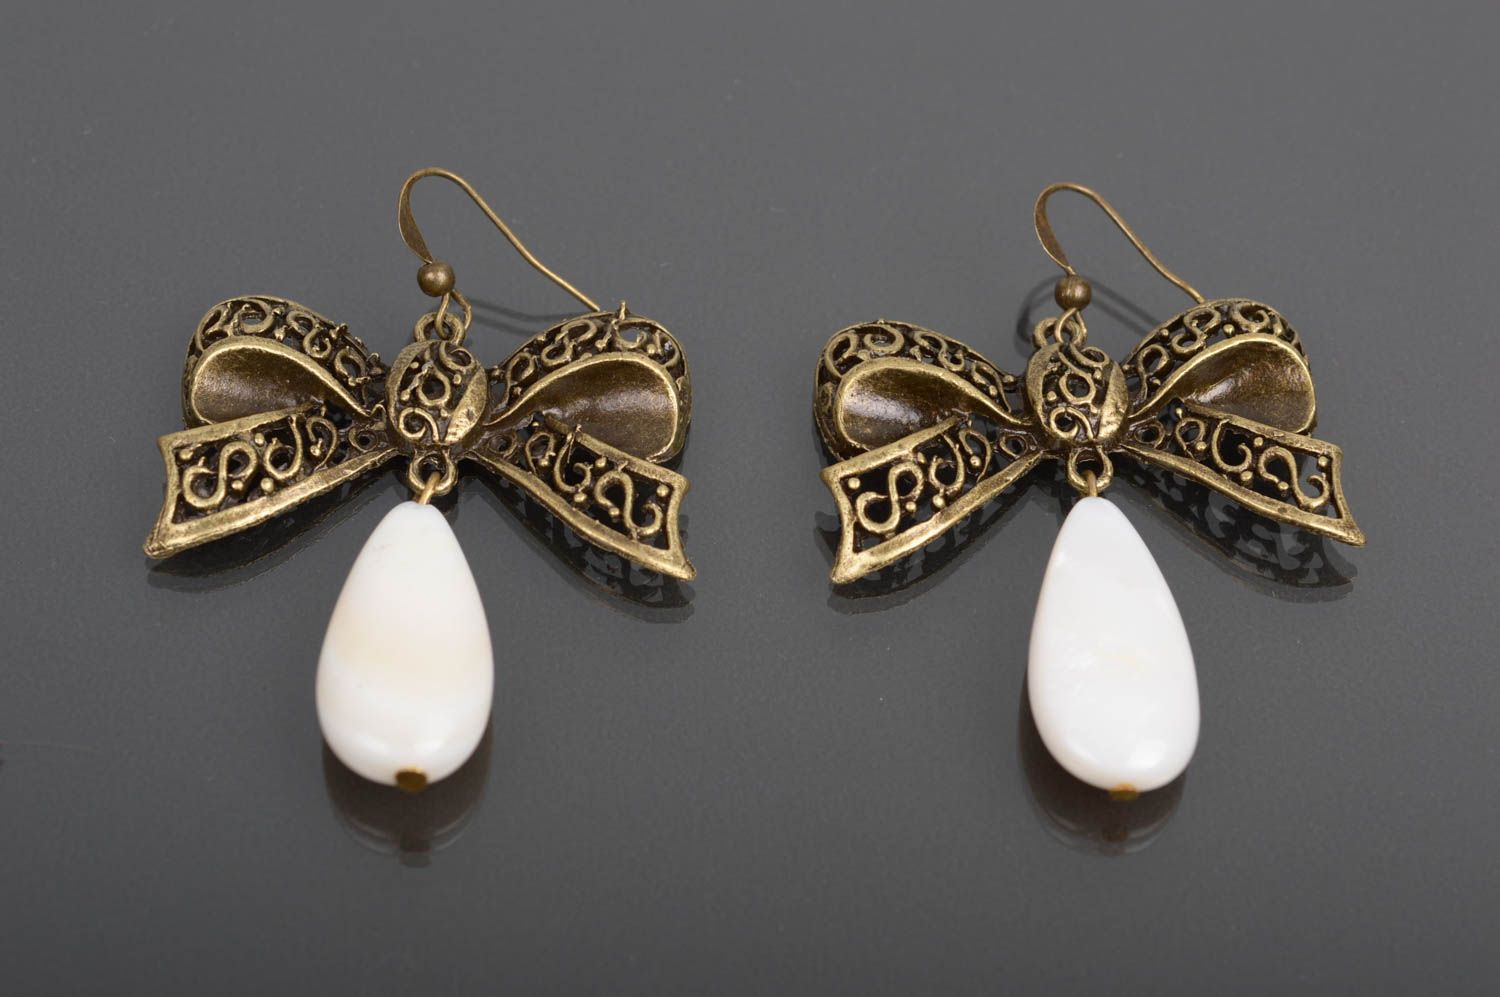 Unusual handmade metal earrings gemstone earrings fashion accessories for girls photo 1